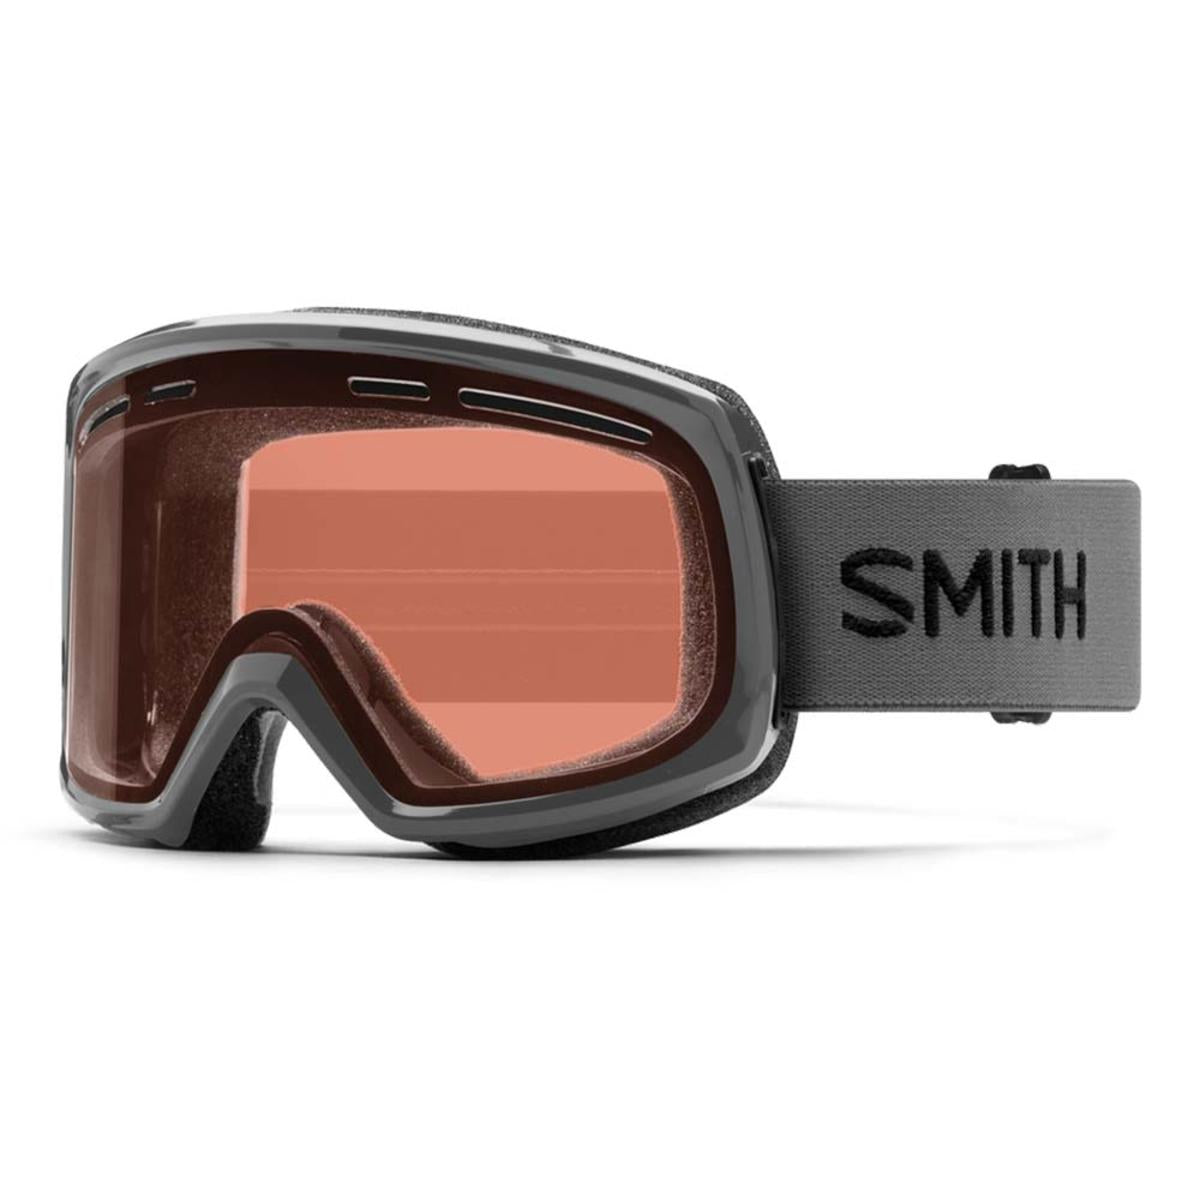 Smith Optics Range Goggles RC36 - Charcoal Frame